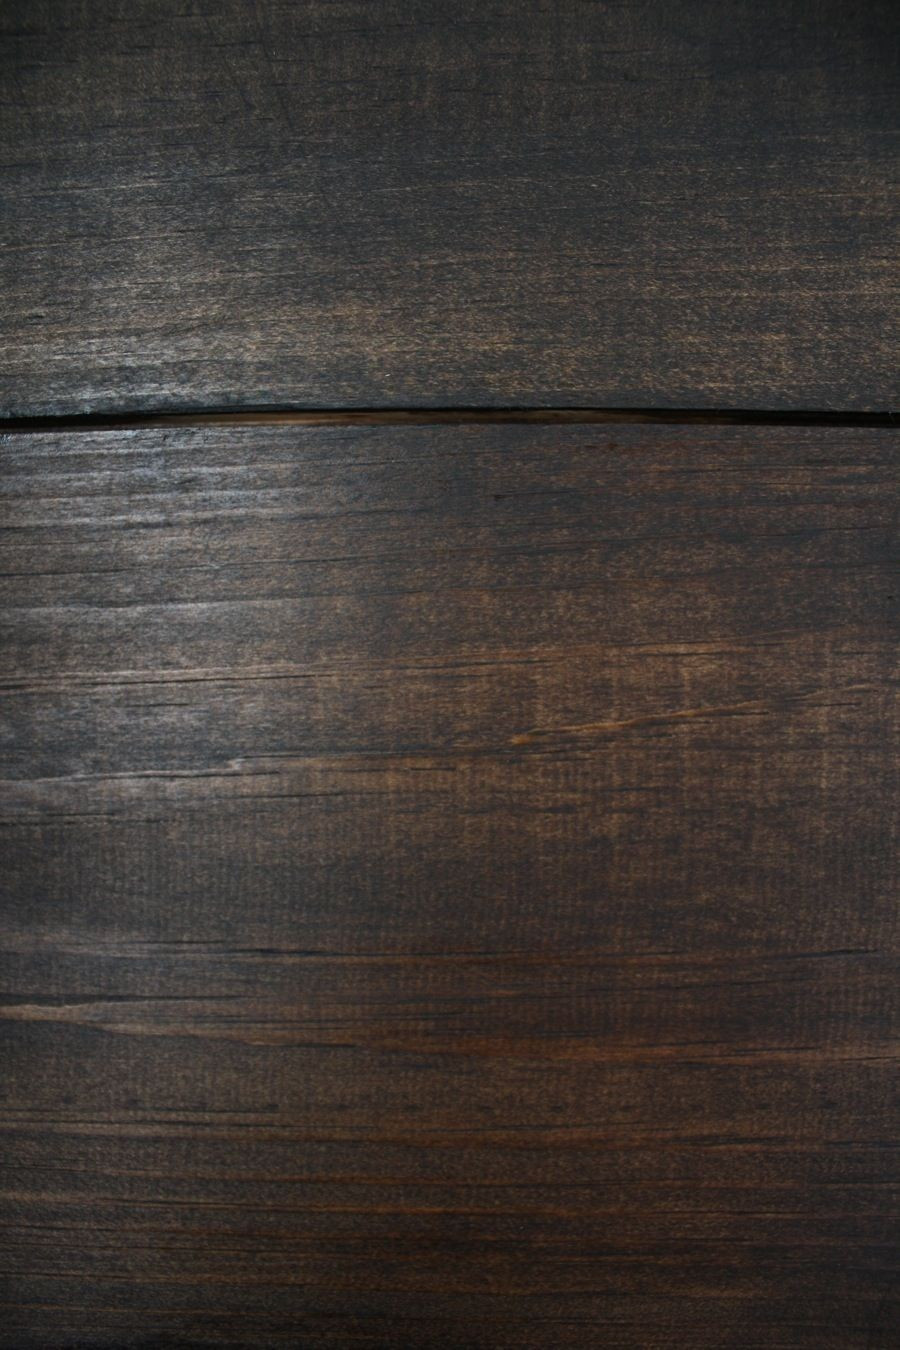 Hardwood Floor Refinishing Colors Of 15 Unique Hardwood Floor Stain Colors Photos Dizpos Com Inside Hardwood Floor Stain Colors Unique Adding A Coat Of Jacobean Minwax Stain Over the Dark Walnut